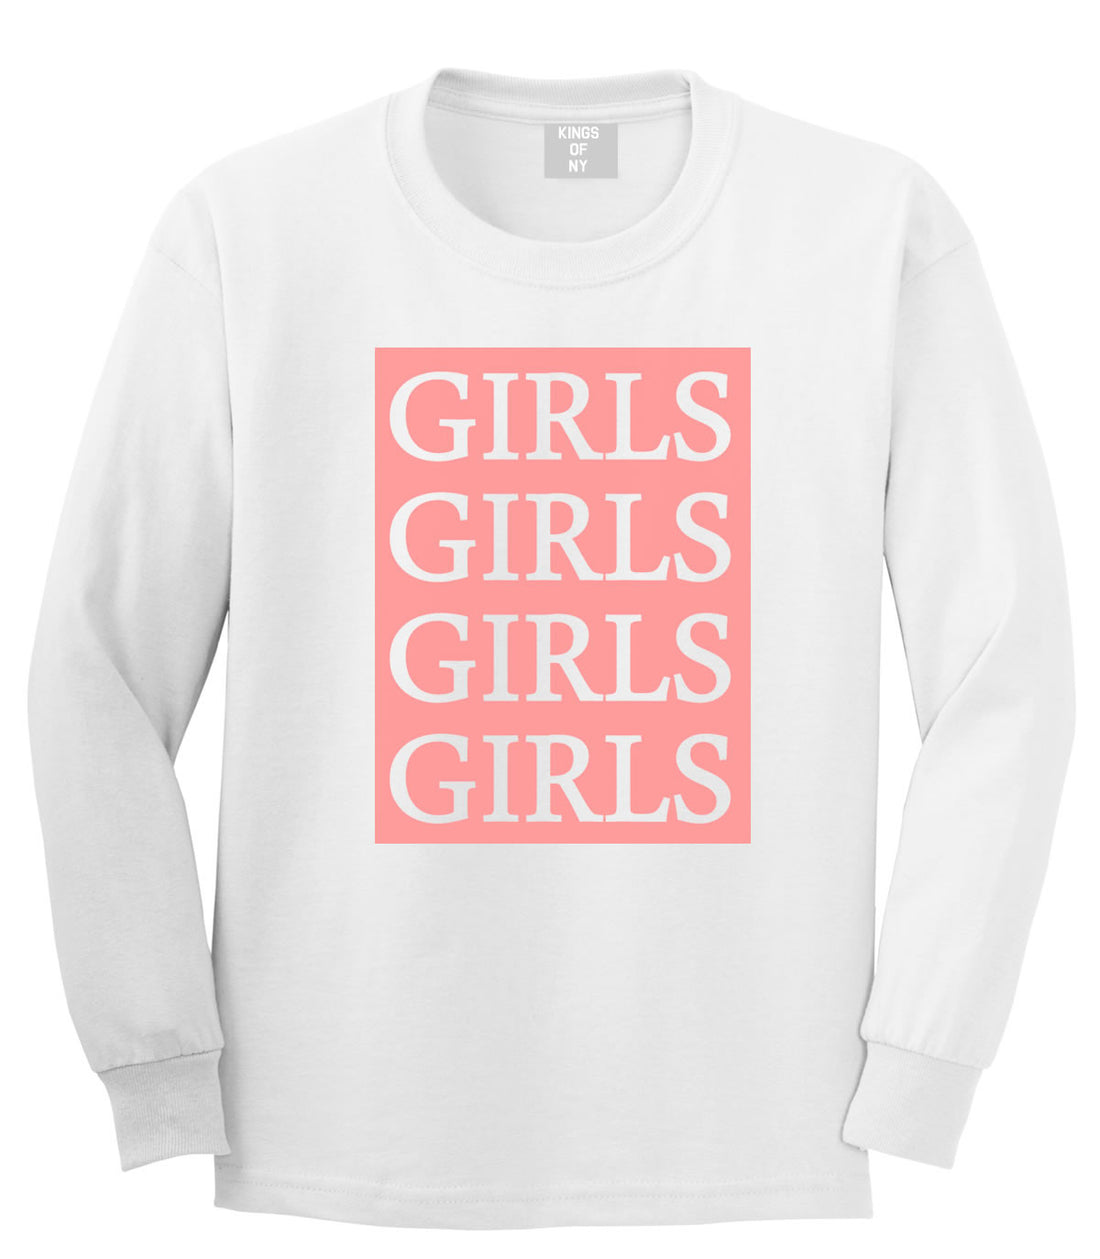 Girls Girls Girls Long Sleeve T-Shirt in White by Kings Of NY